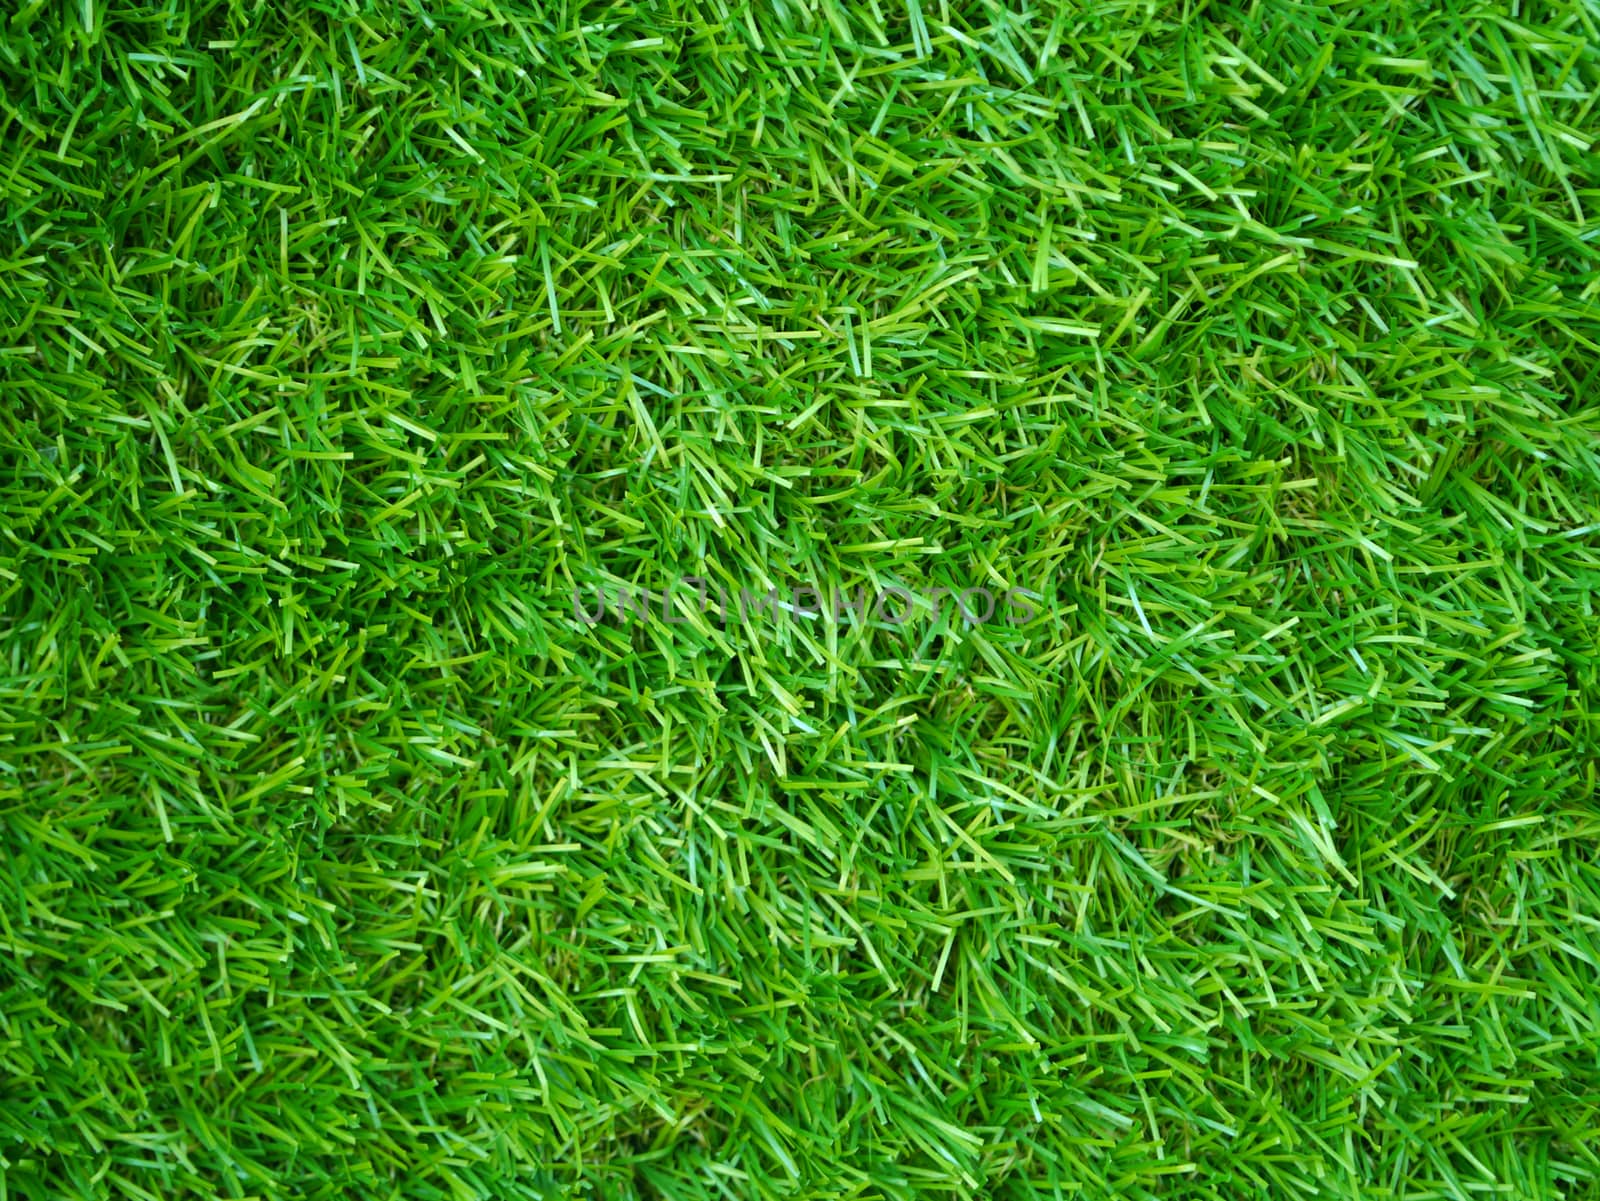 Artificial Grass Field Top View Texture by Noppharat_th